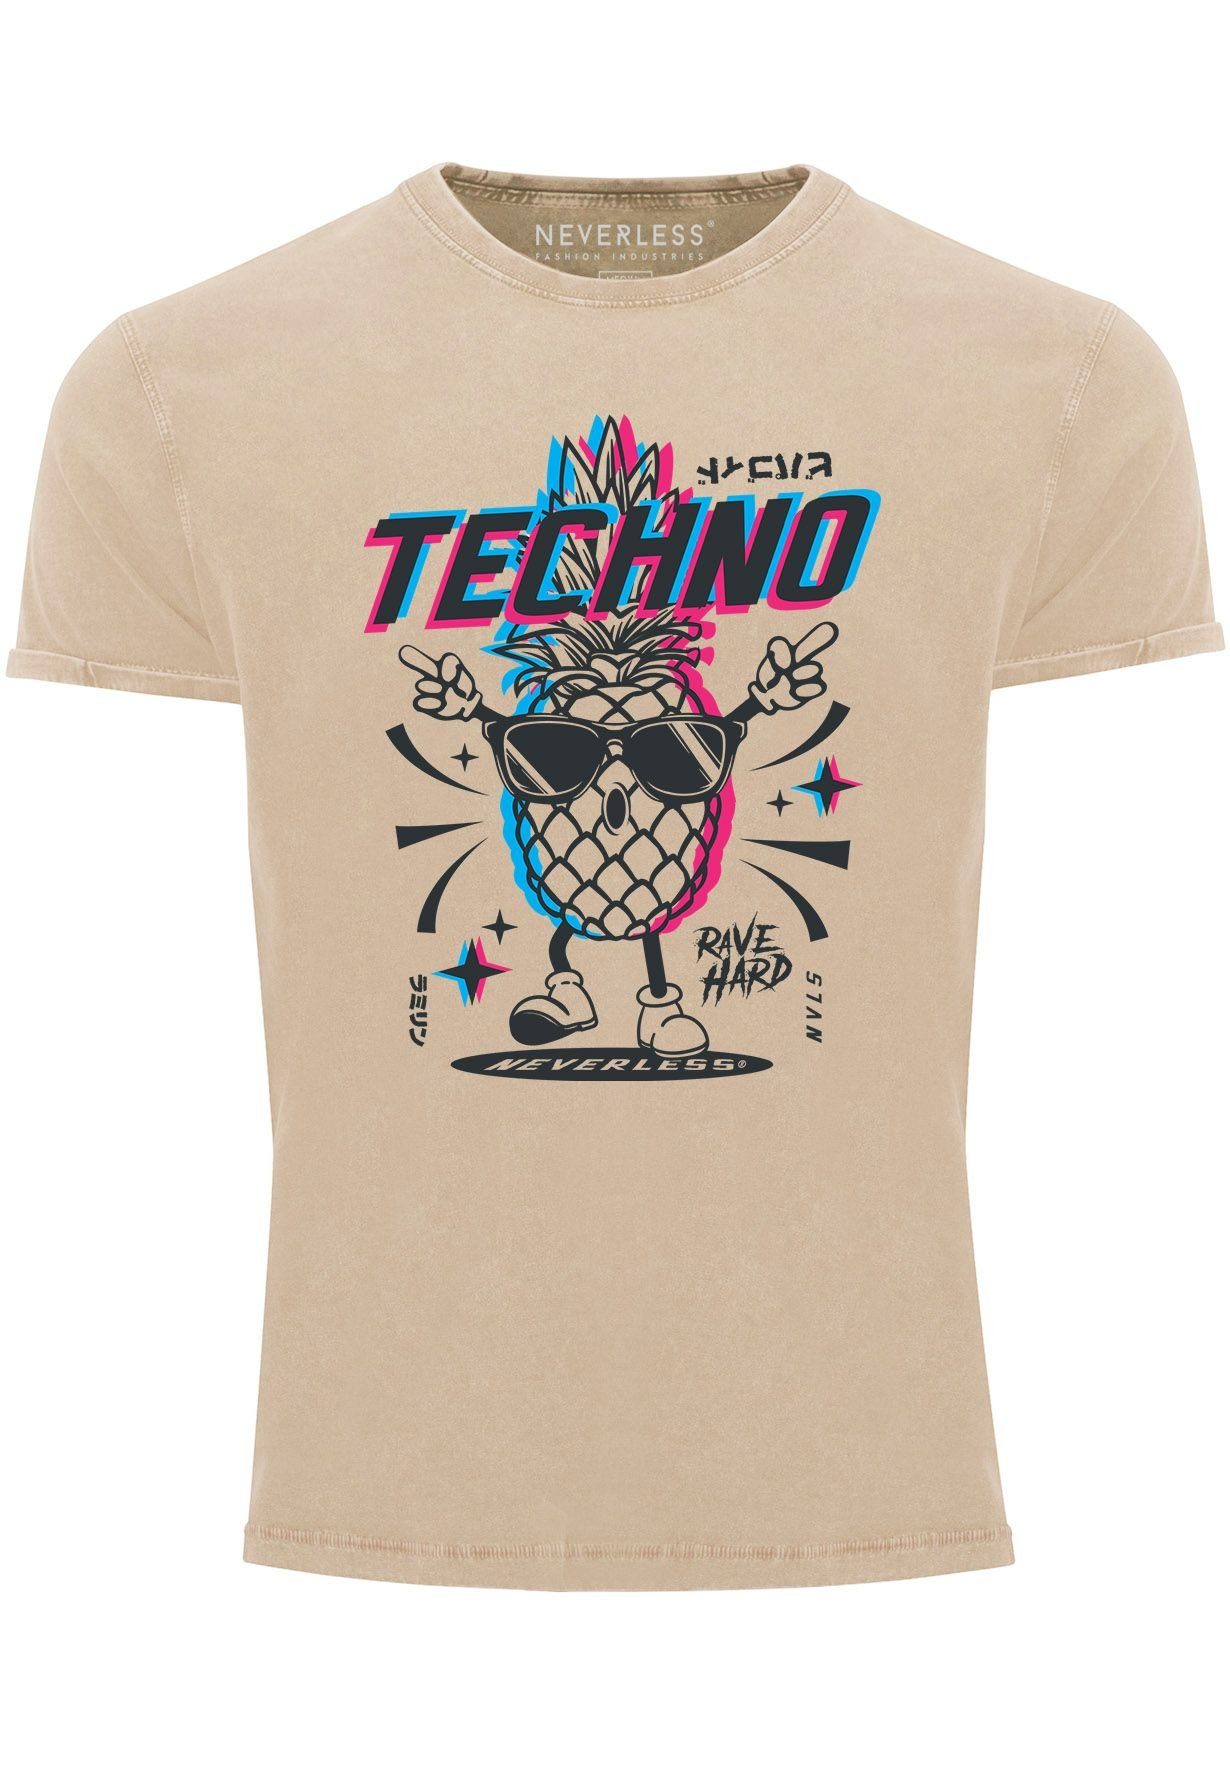 Print natur Party Lustig Print-Shirt Herren Ananas Rave Tanzen Vintage Techno Printshirt Neverless Shirt mit